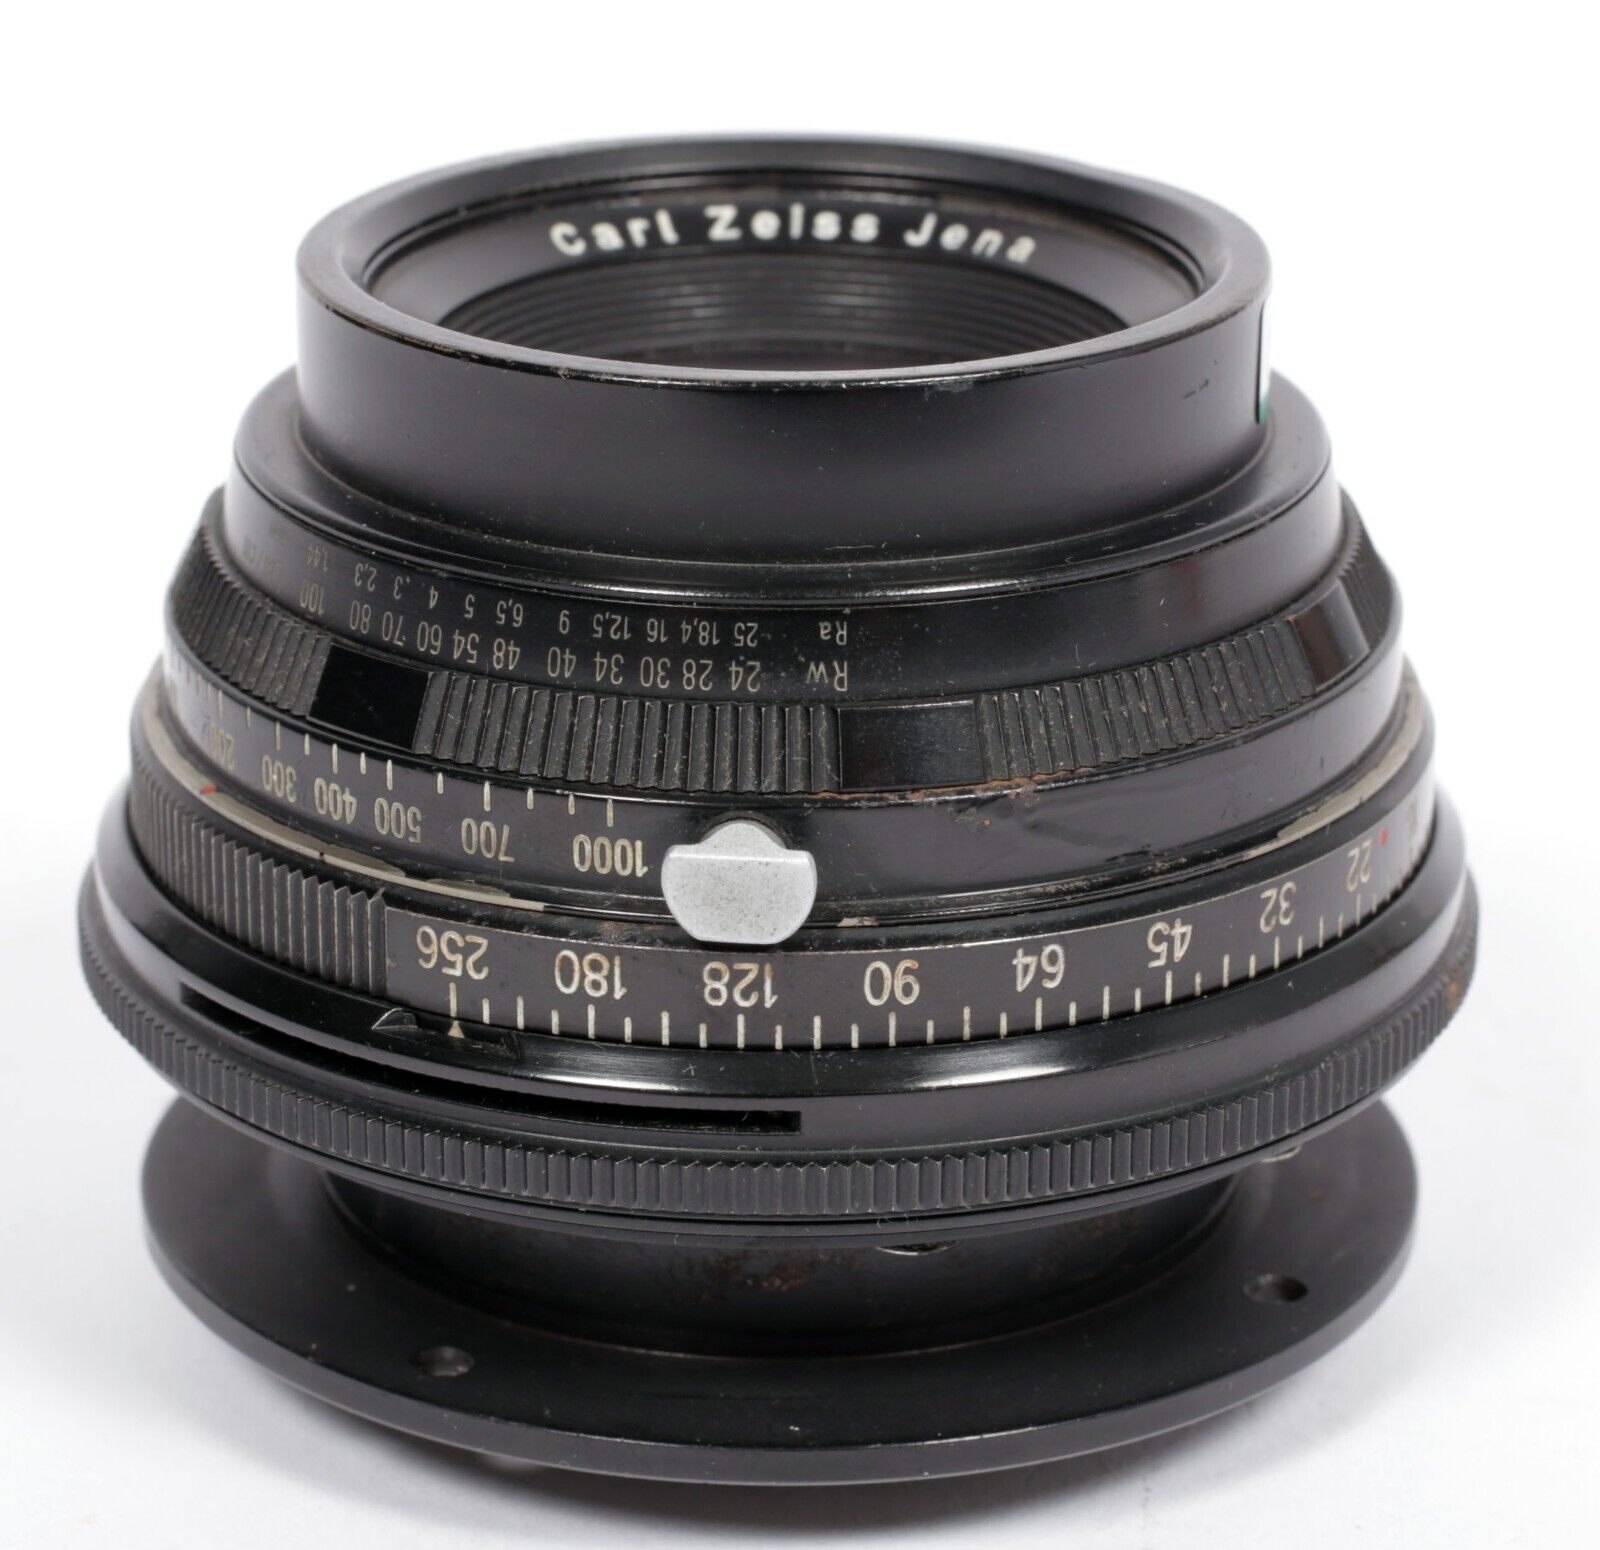 Carl Zeiss Jena Apo Germinar 300mm F9 large format Lens in barrel #8781